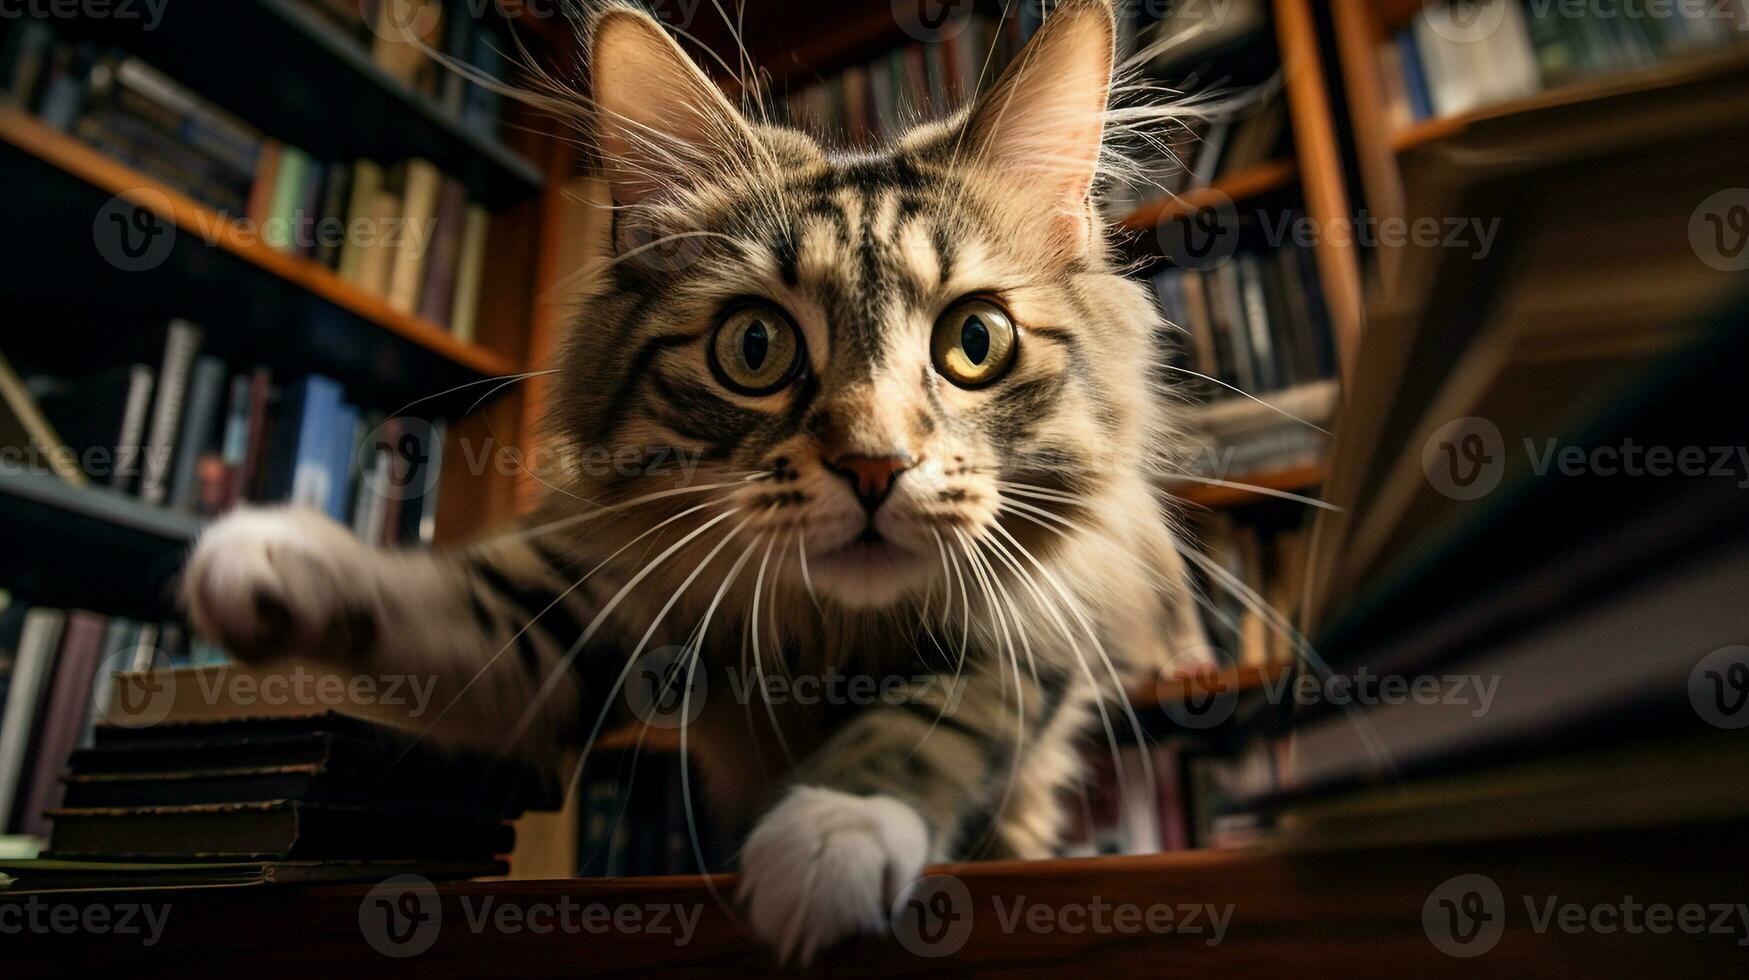 AI generated Photo of a mischievous cat exploring a bookshelf. Generative AI